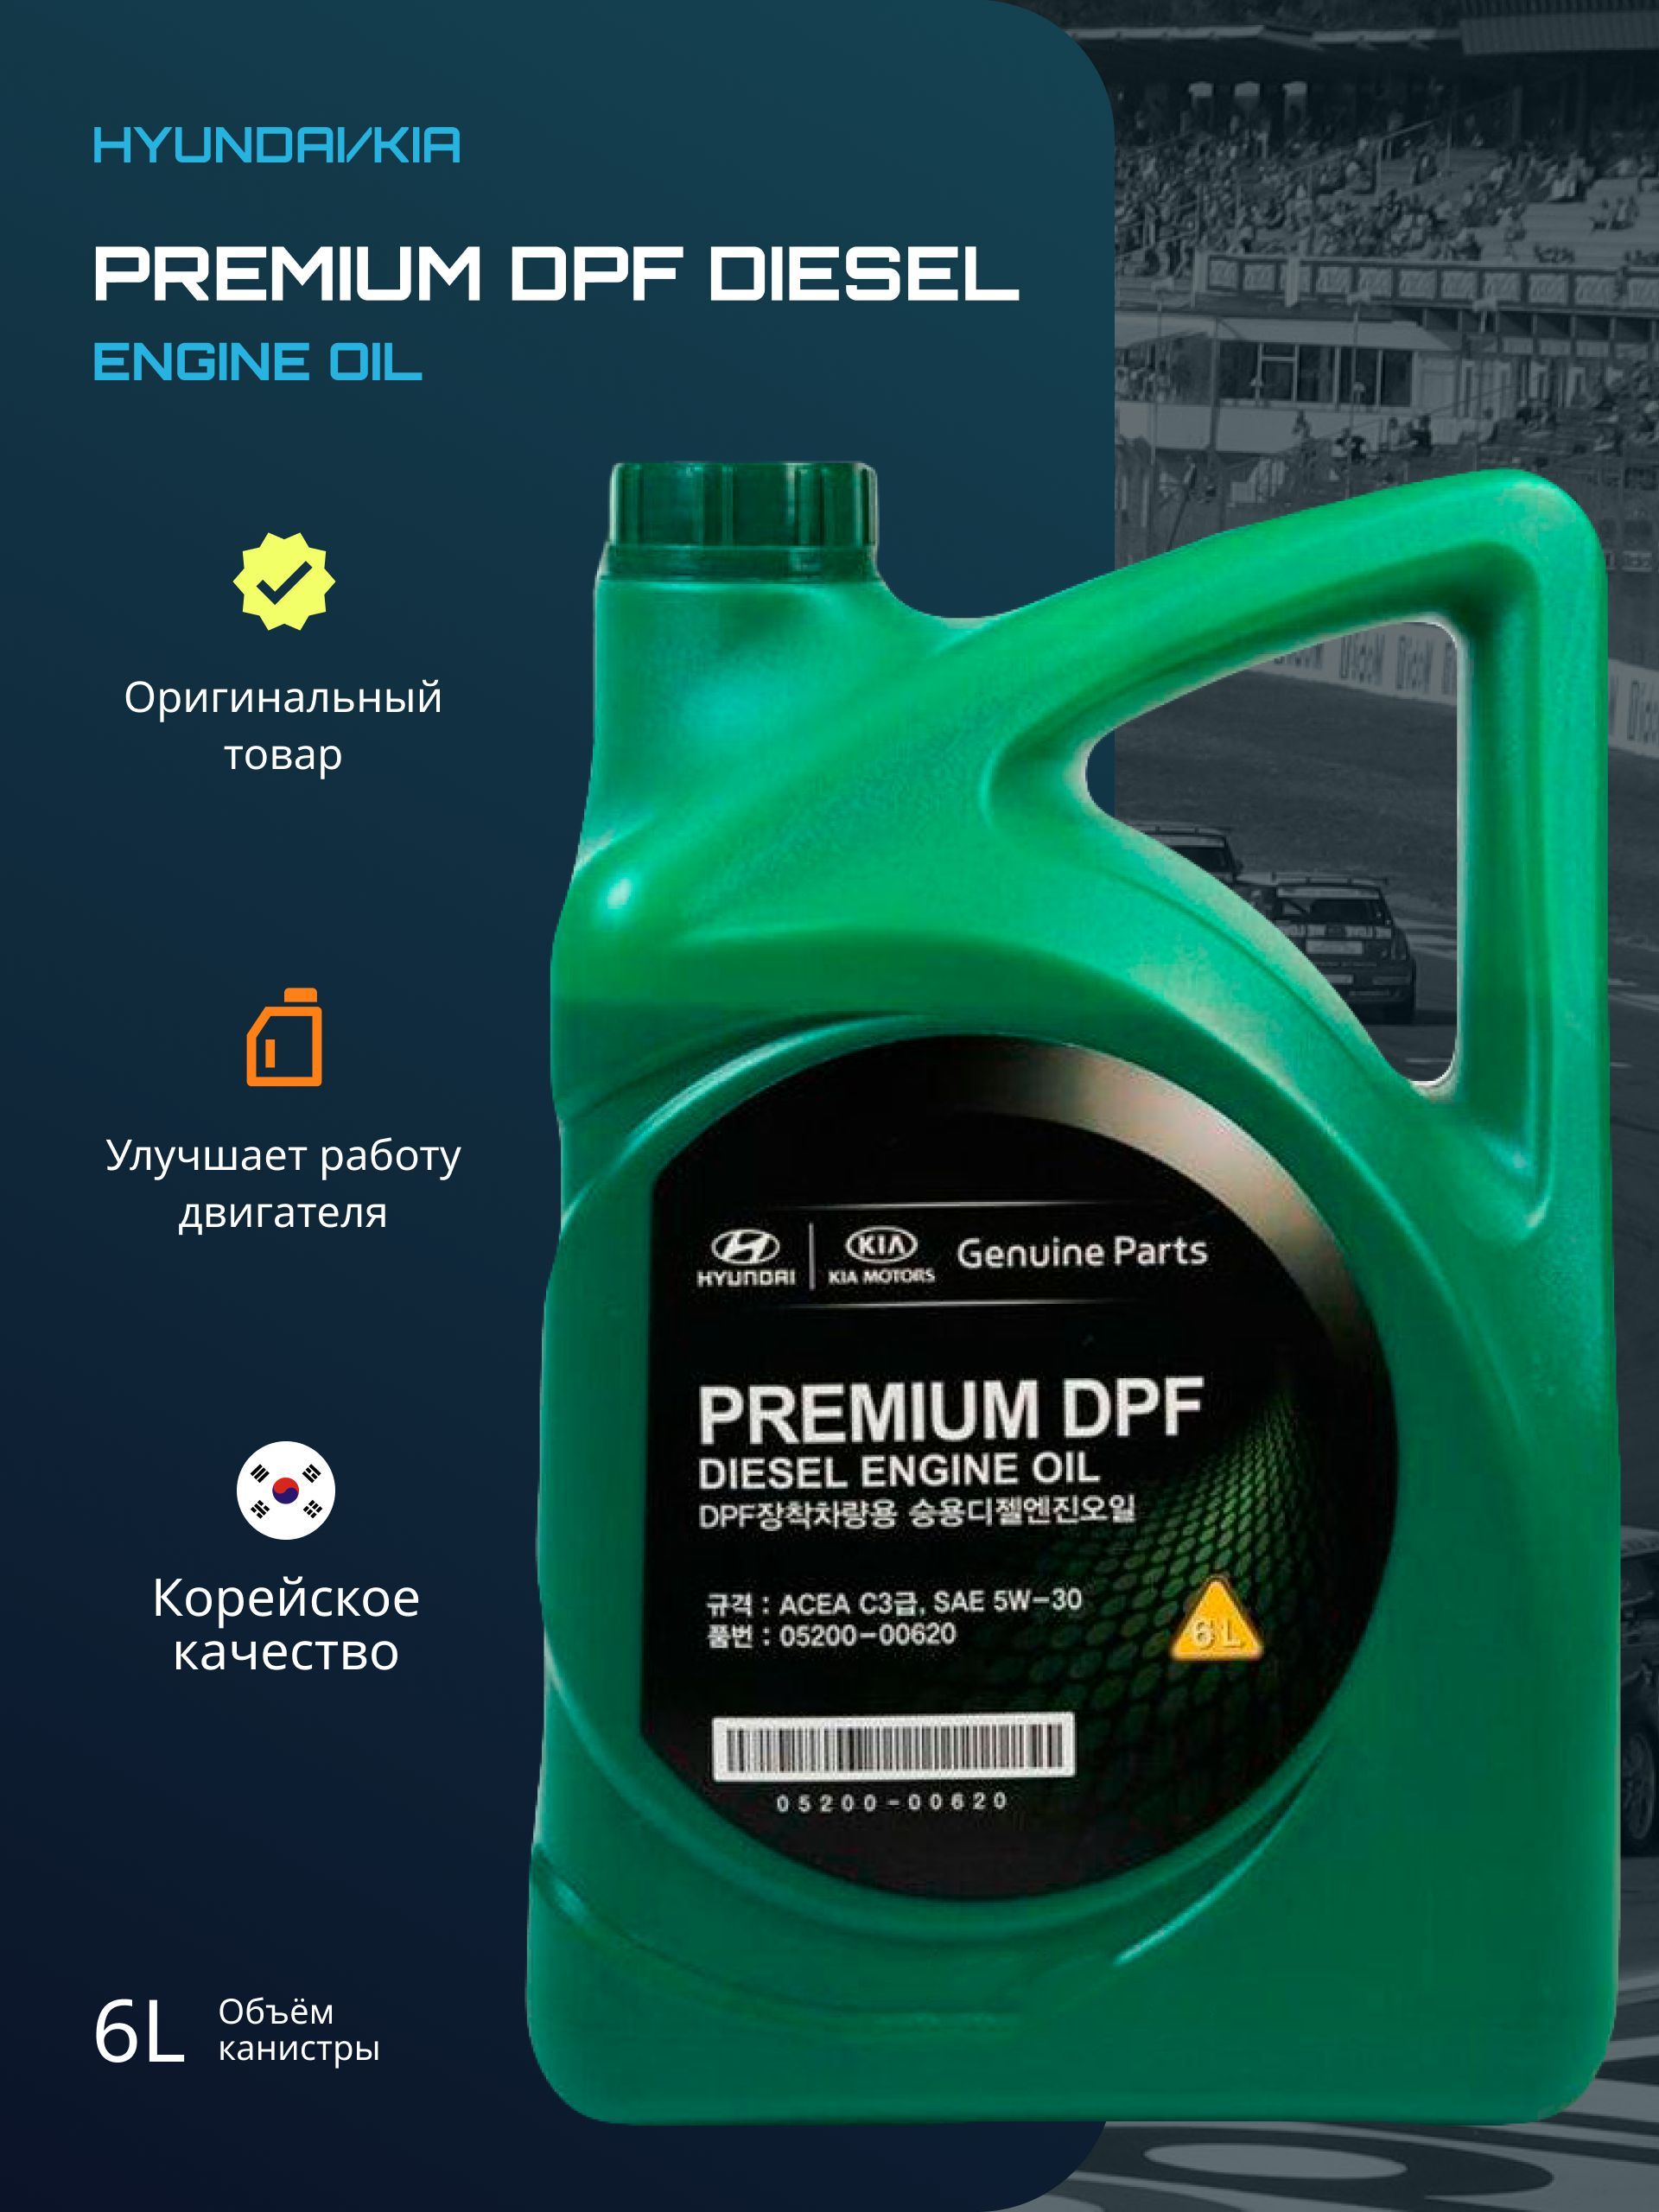 Hyundai Premium DPF Diesel. 0520000620 Hyundai-Kia масло мотор. 6л. Prem. DPF Diesel 5w-30. Как расшифровать дату производства масла Kia Premium DPF Diesel. Масло kia premium dpf